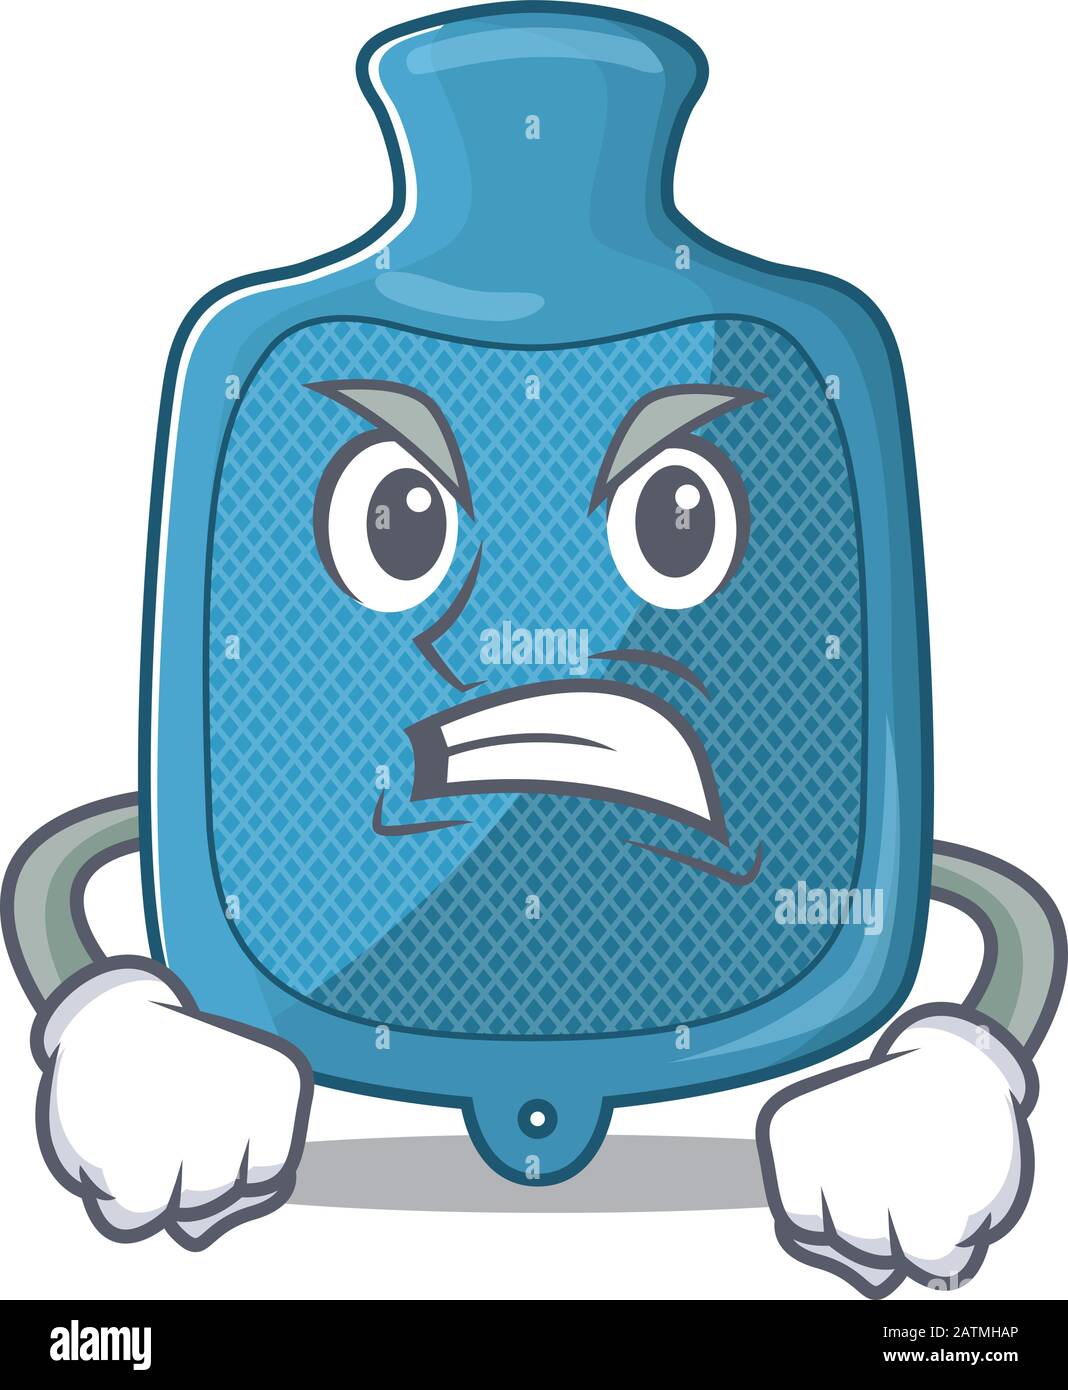 Hot water bag cartoon character design having angry face Stock Vector Image  & Art - Alamy